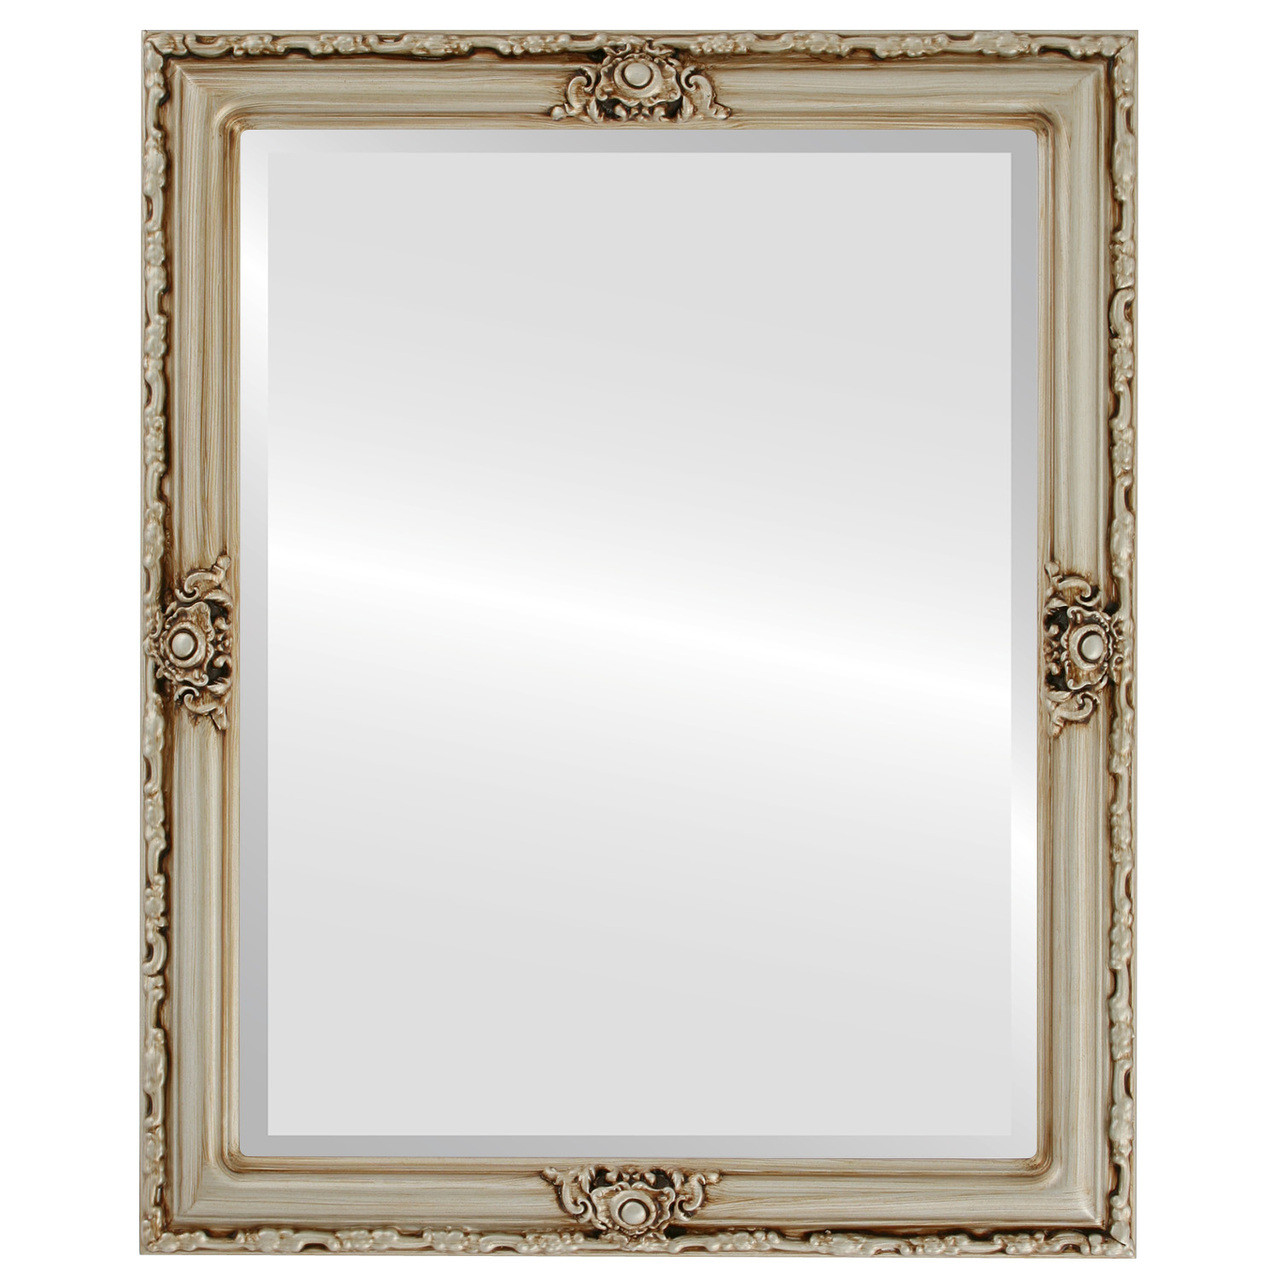 Jefferson Rectangle framed mirror Silver |Victorian Frames